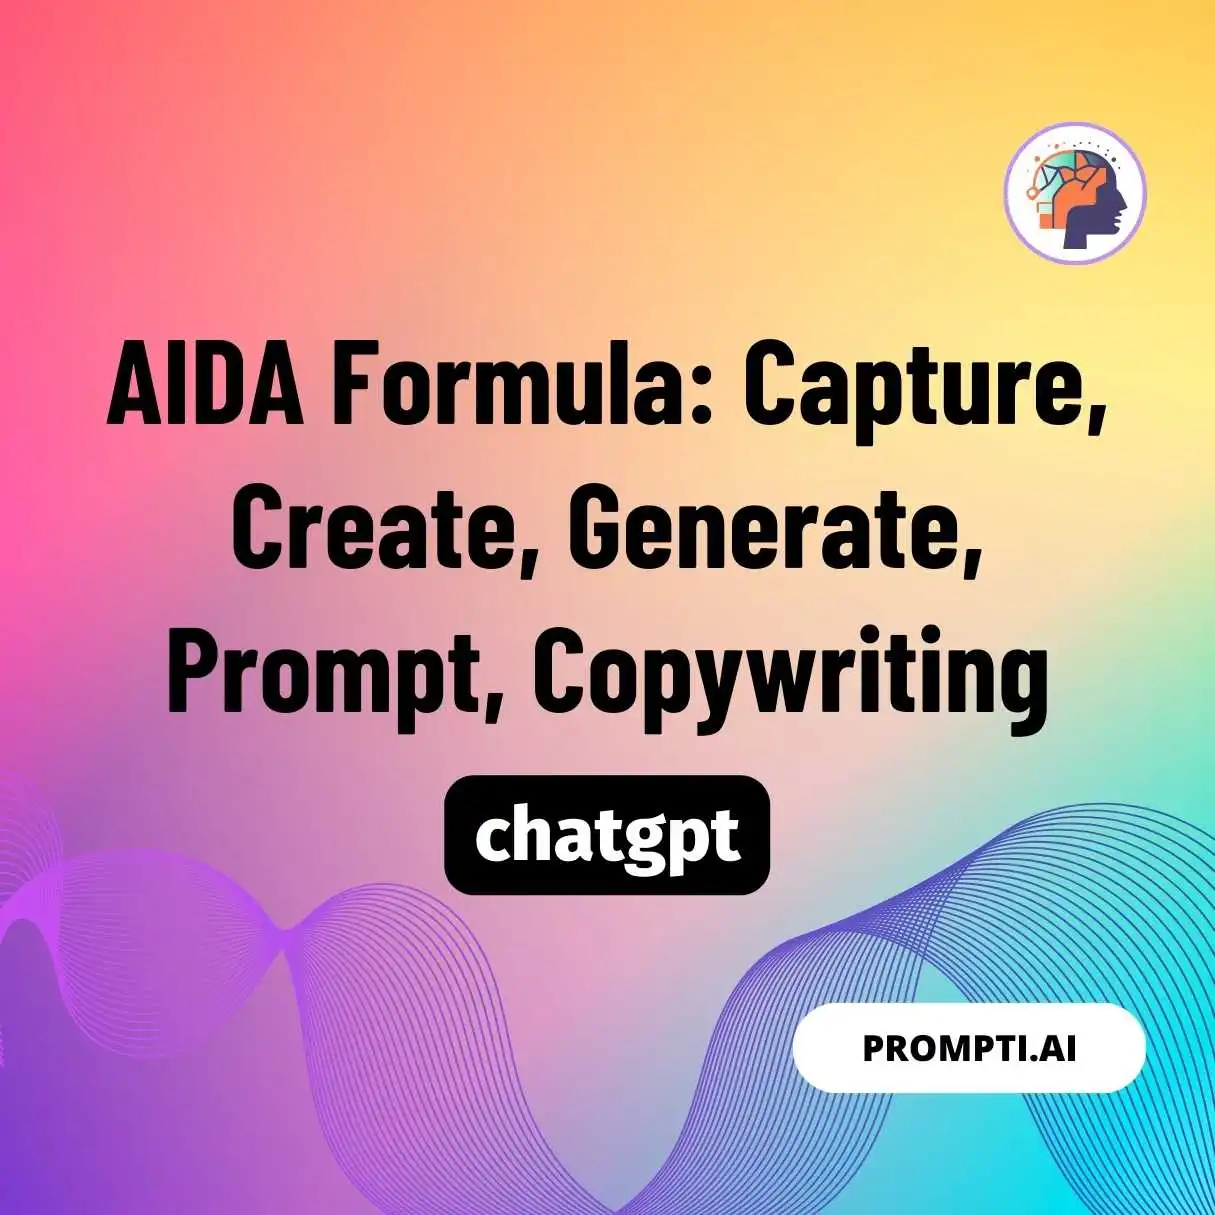 AIDA Formula: Capture, Create, Generate, Prompt, Copywriting